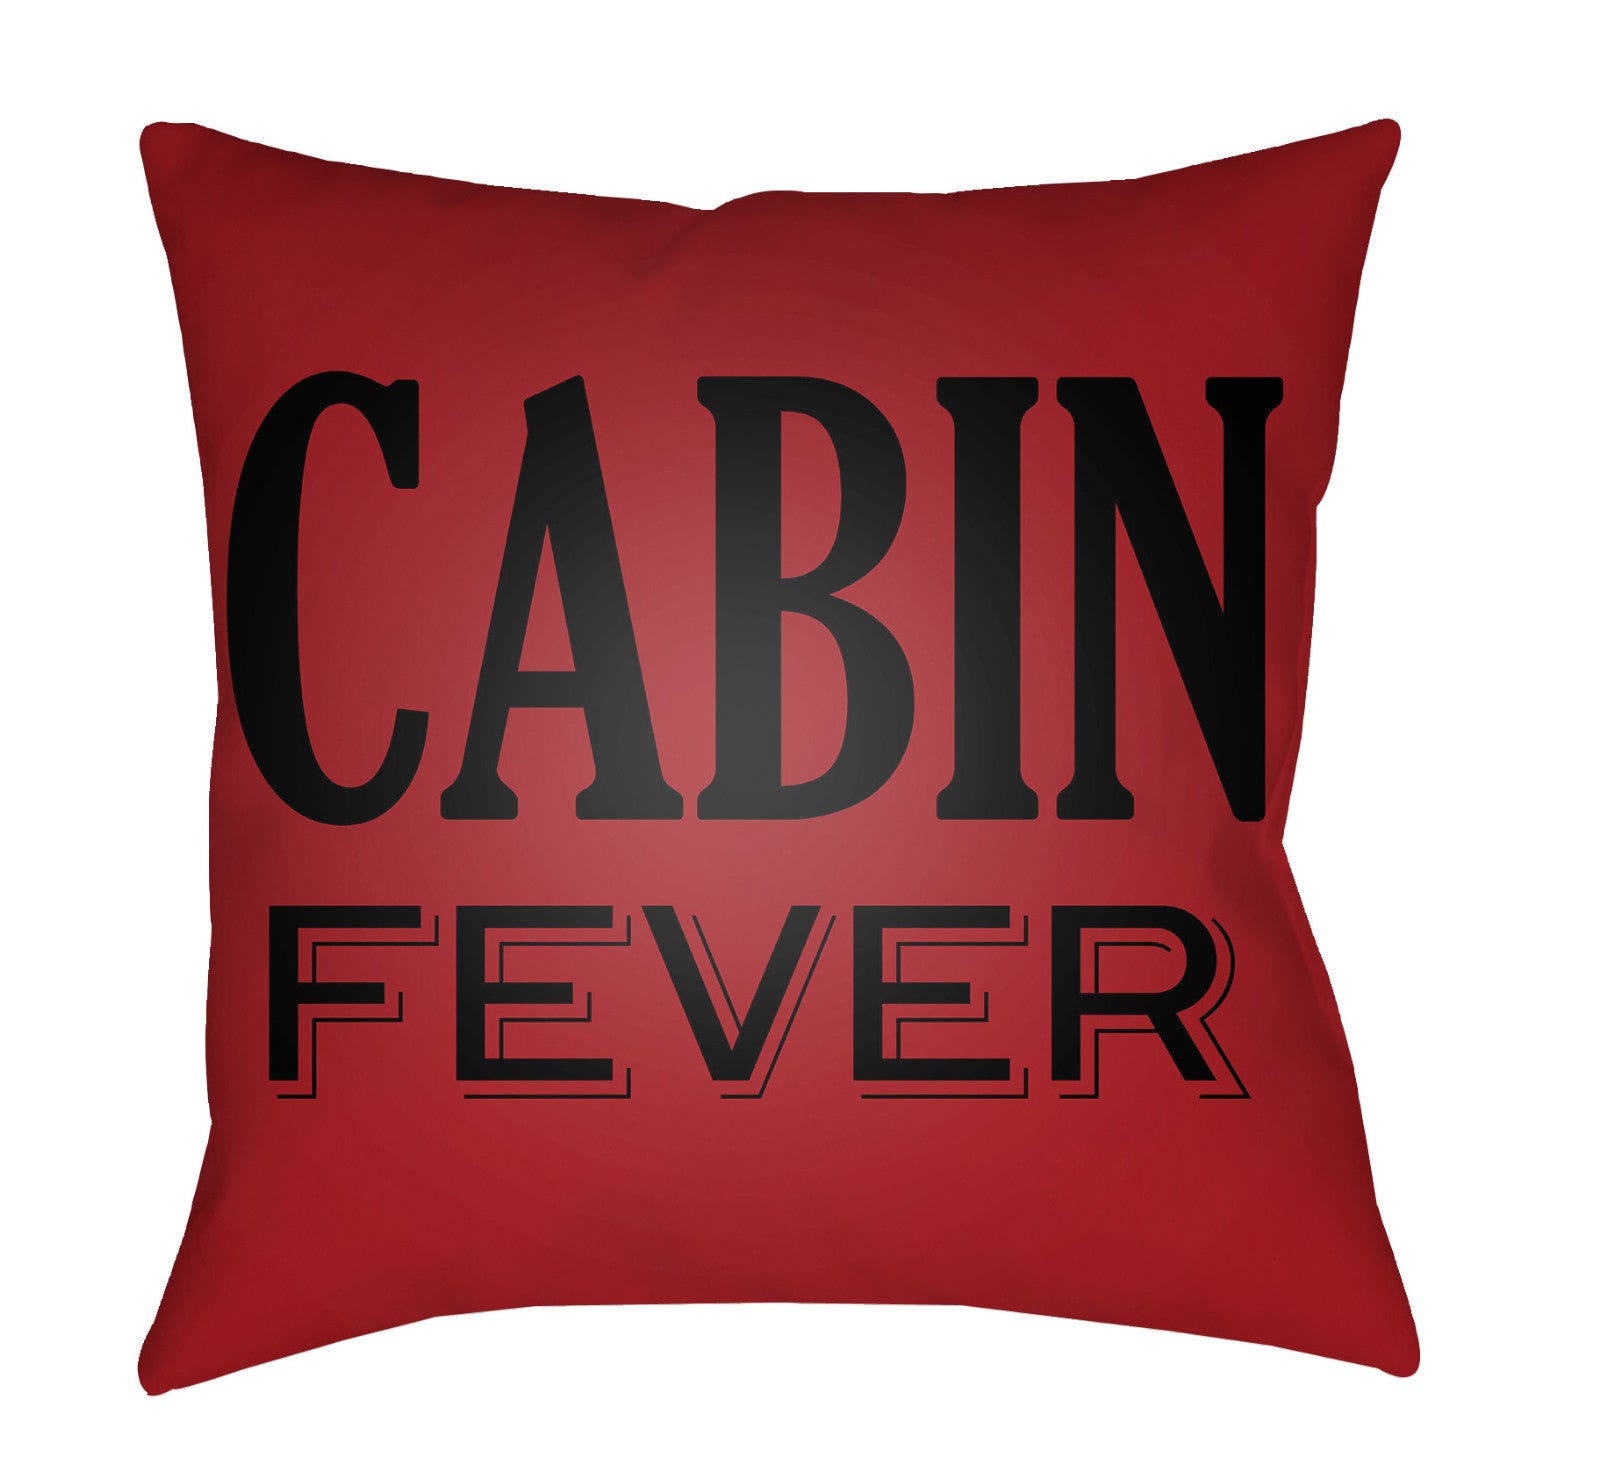 Artistic Weavers Lodge Cabin Fever Crimson Red/Onyx Black main image